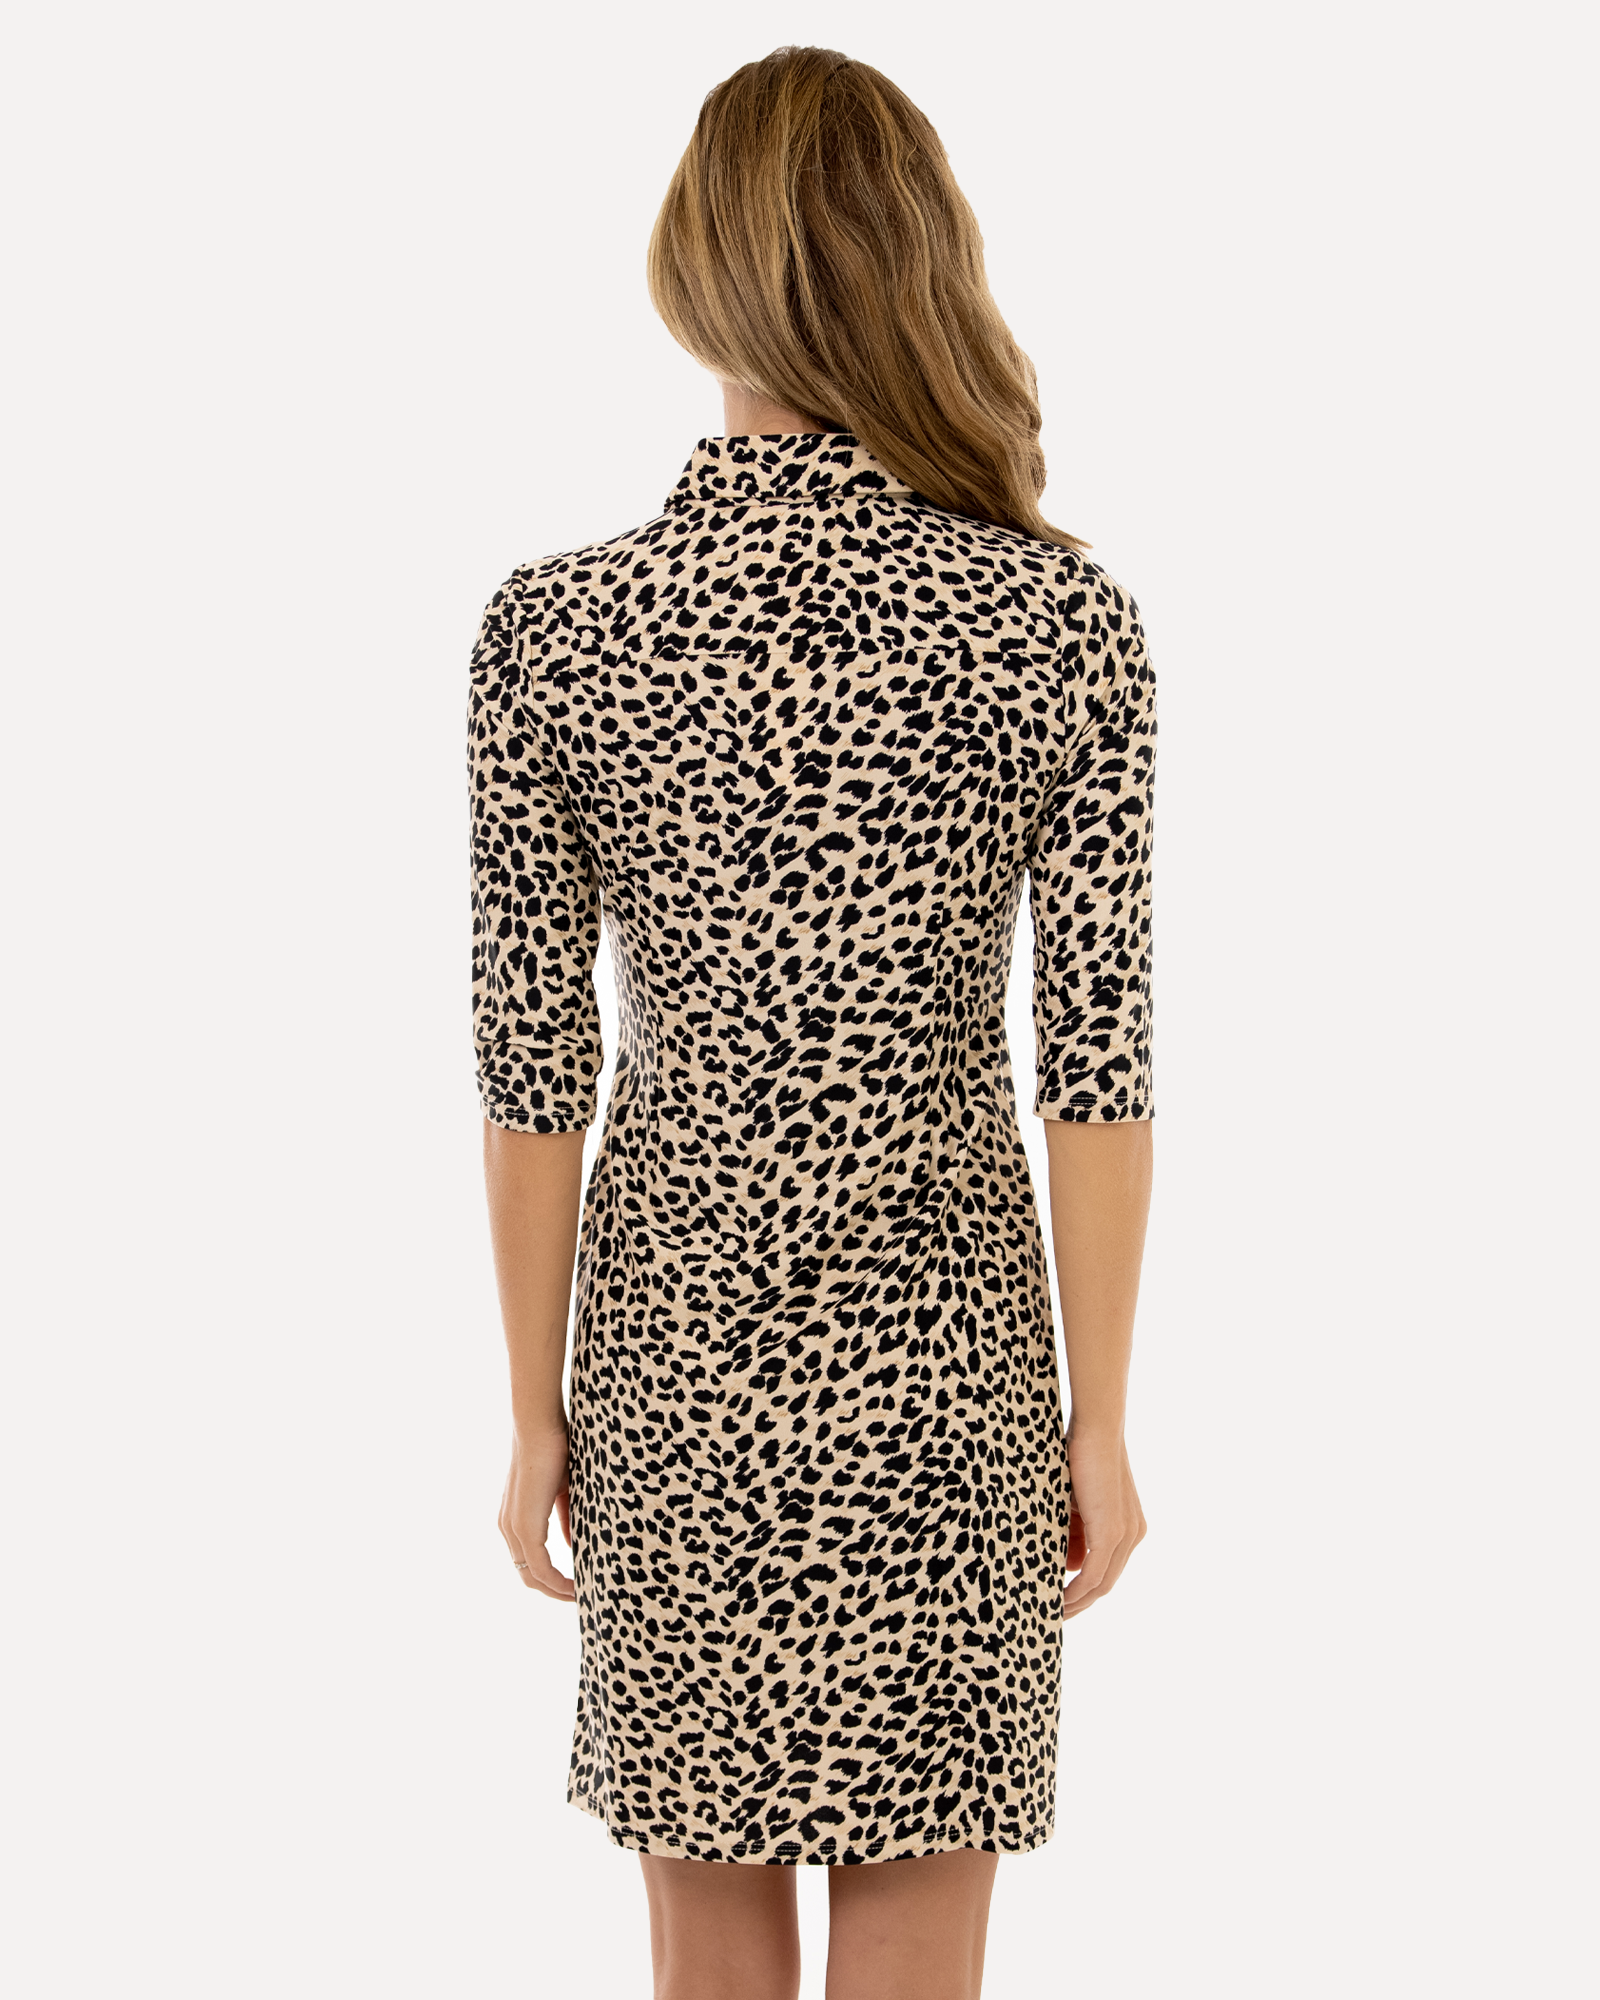 Jude Connally Sloane Dress - Cheetah Camel*